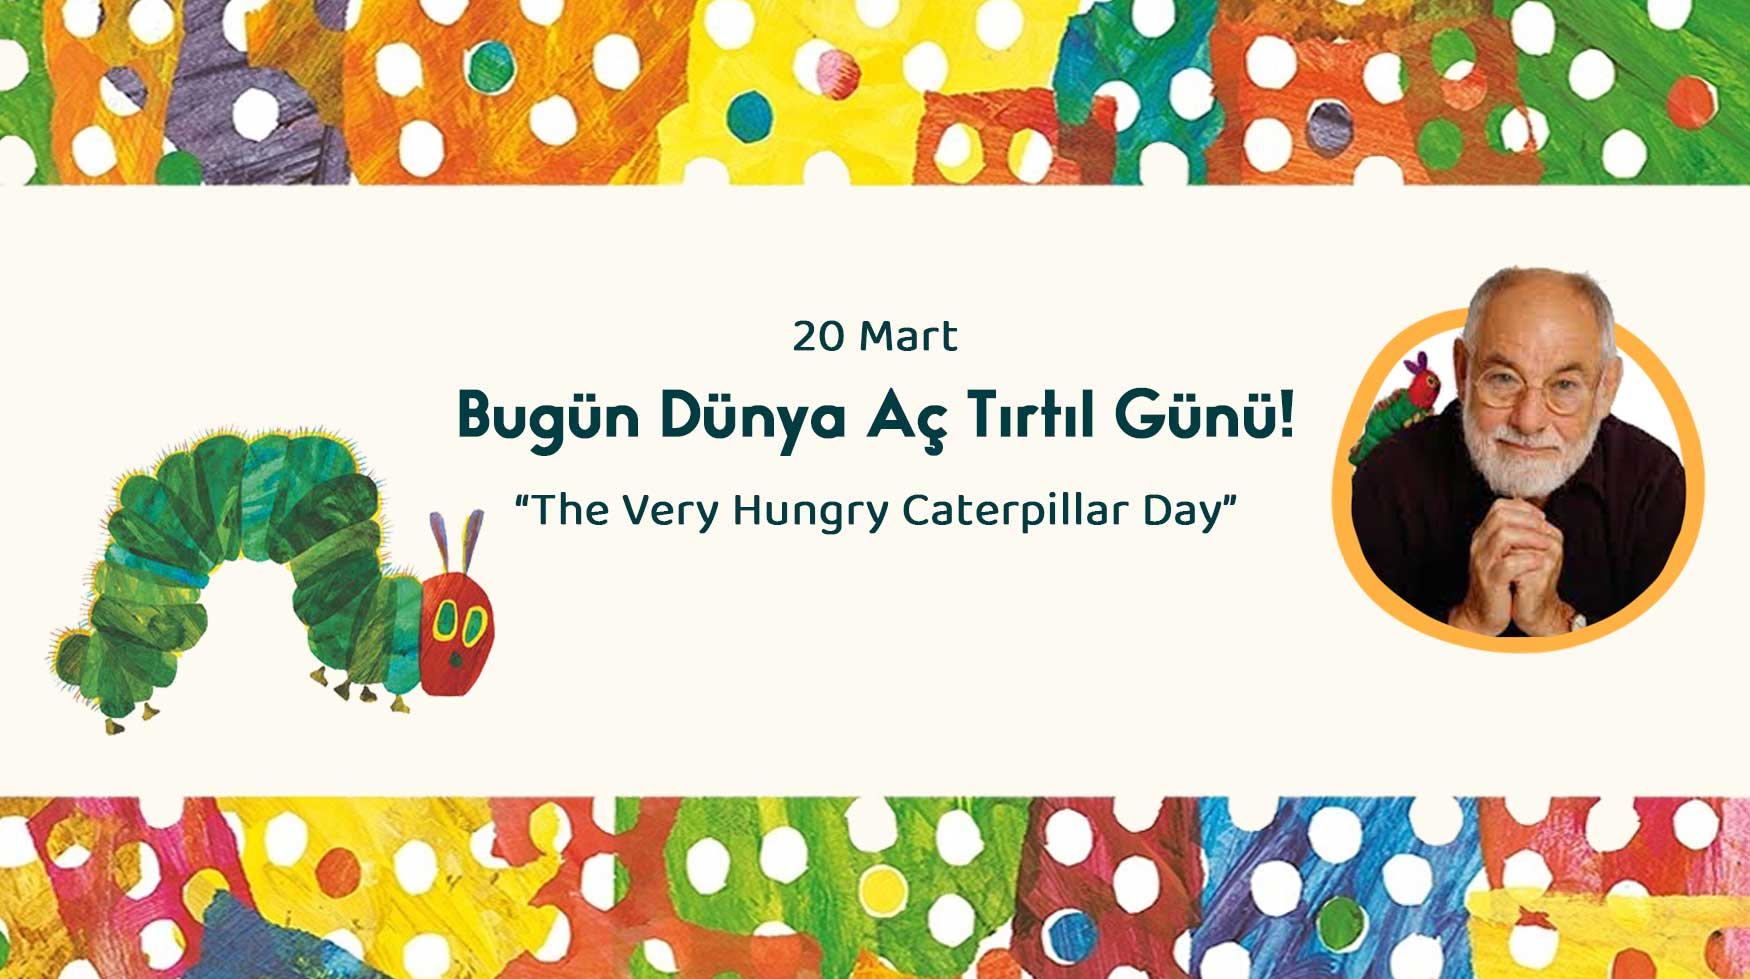 20 Mart Dünya Aç Tırtıl Günü! - “The Very Hungry Caterpillar Day”